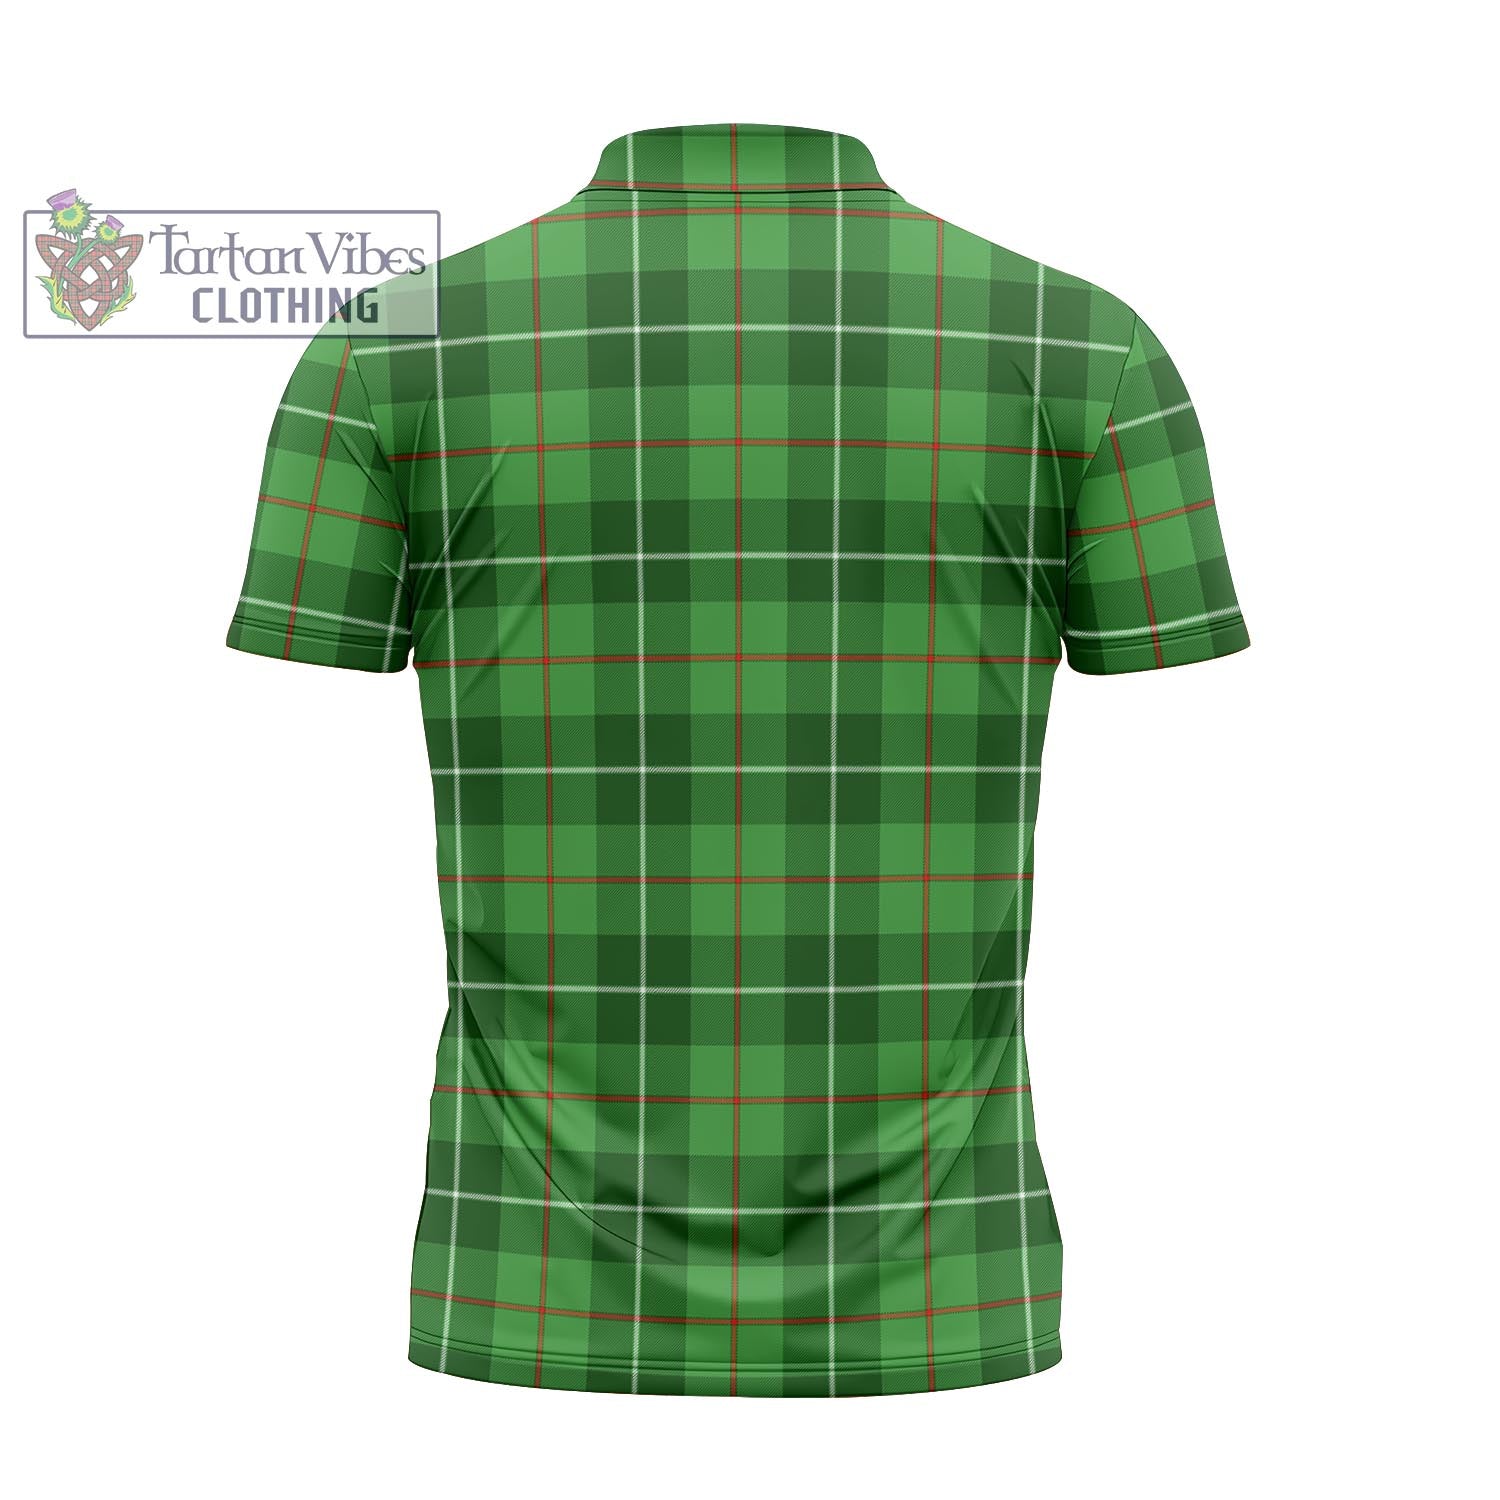 Tartan Vibes Clothing Boyle Tartan Zipper Polo Shirt with Family Crest